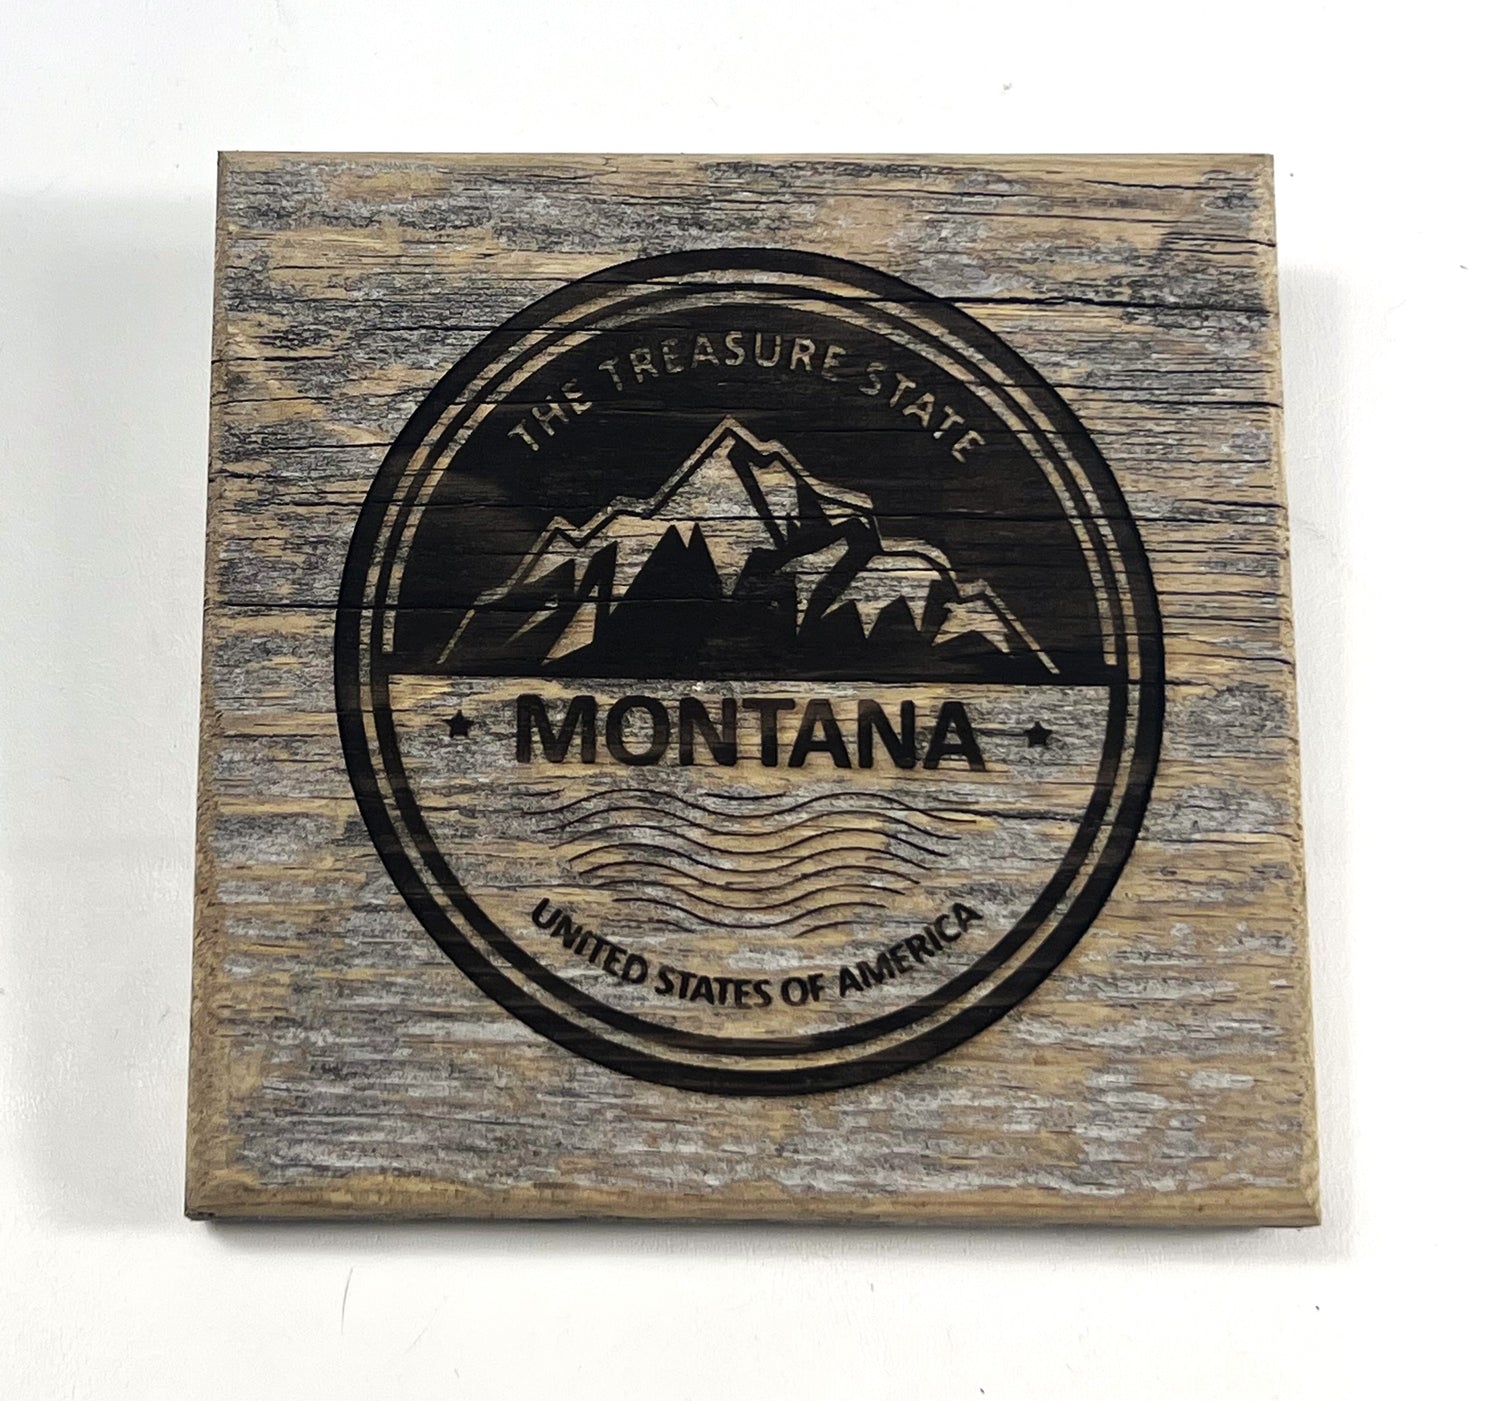 Montana Collection